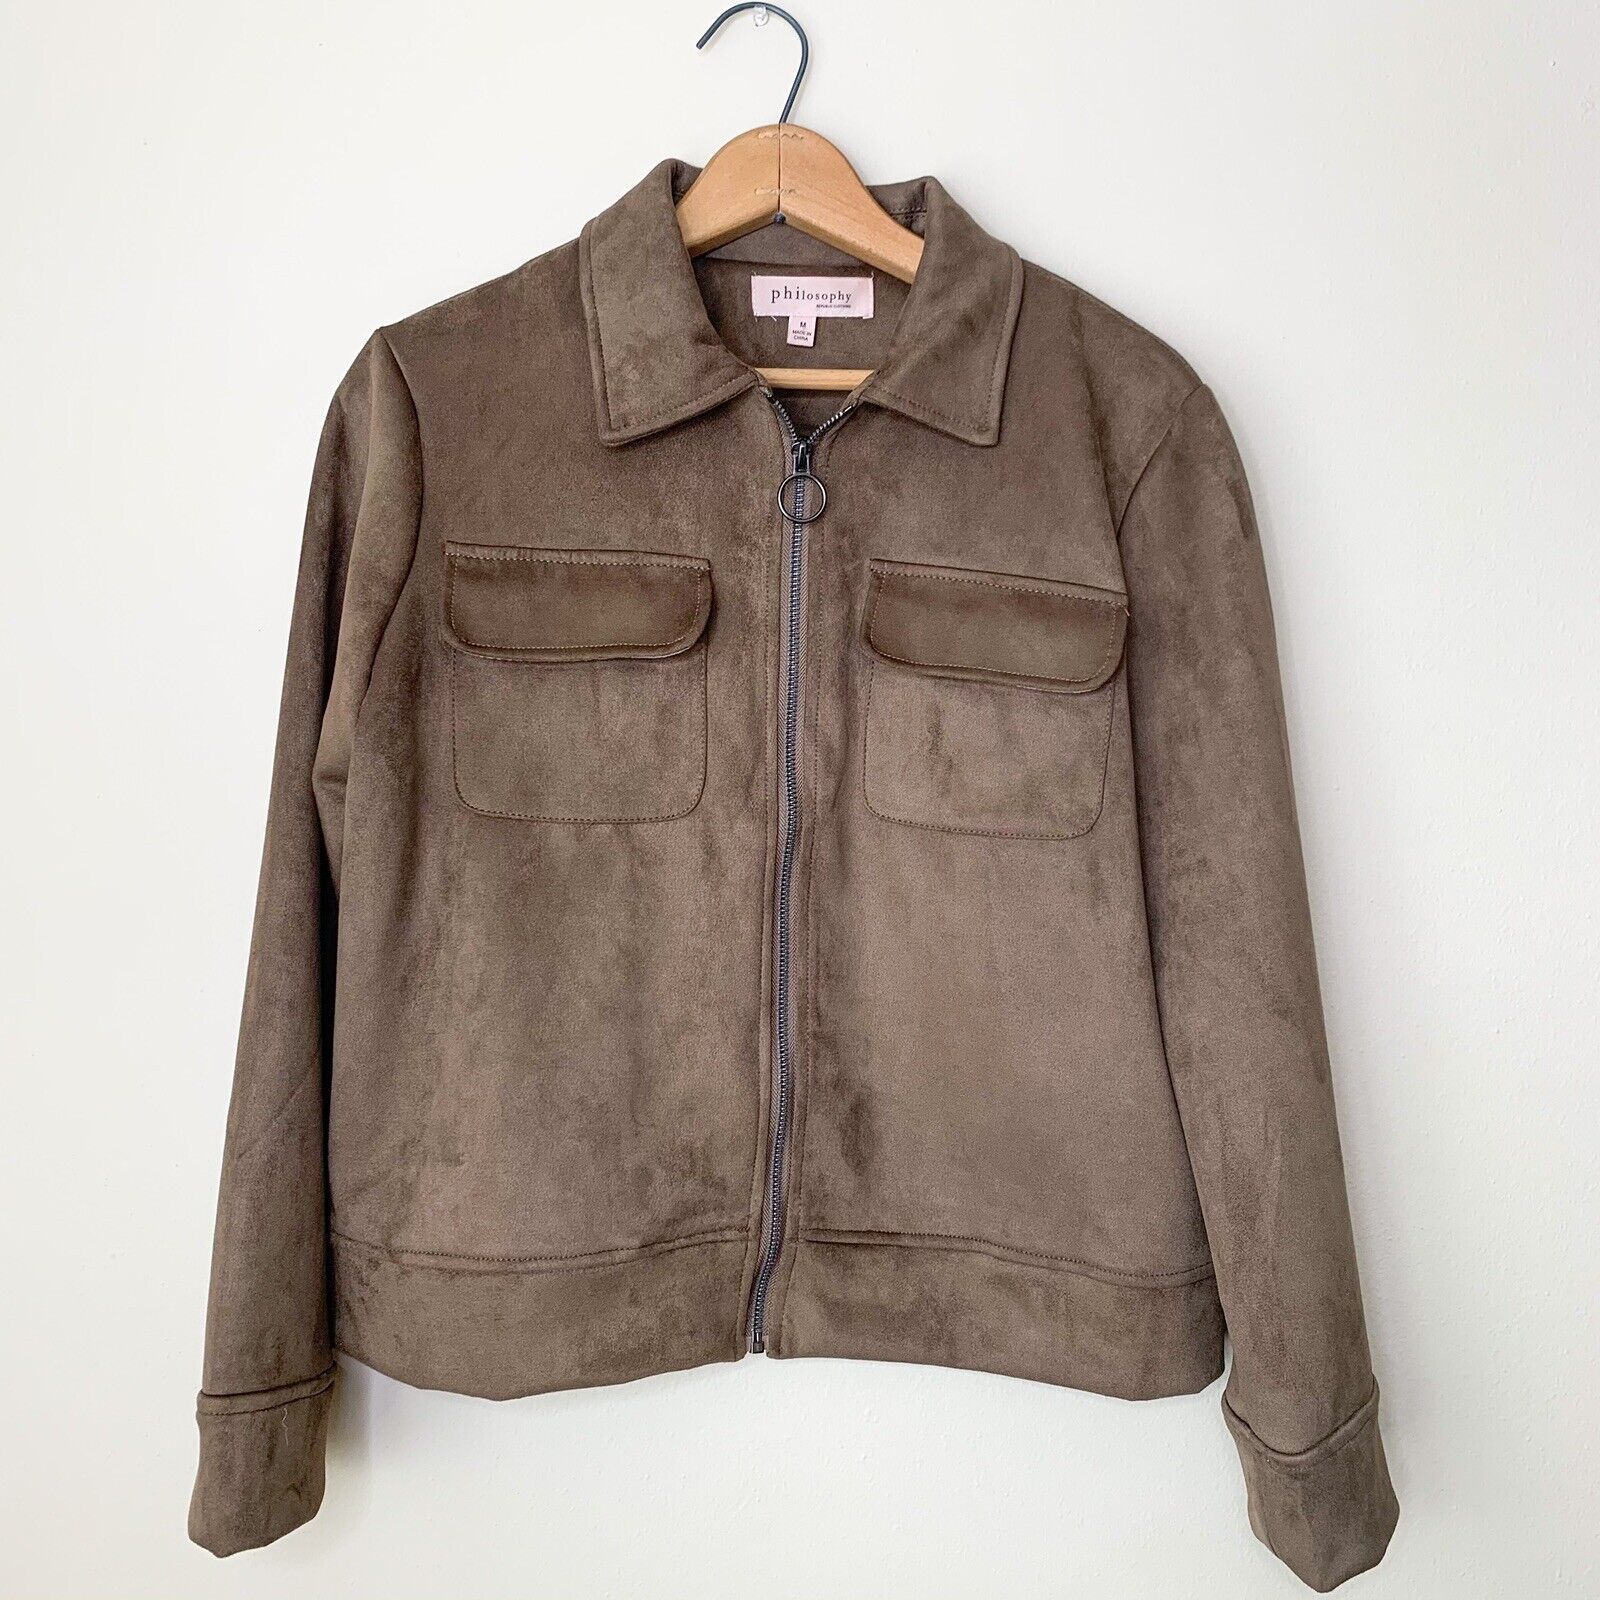 Philosophy Faux Leather Suede Zip Up Jacket, Medium | eBay